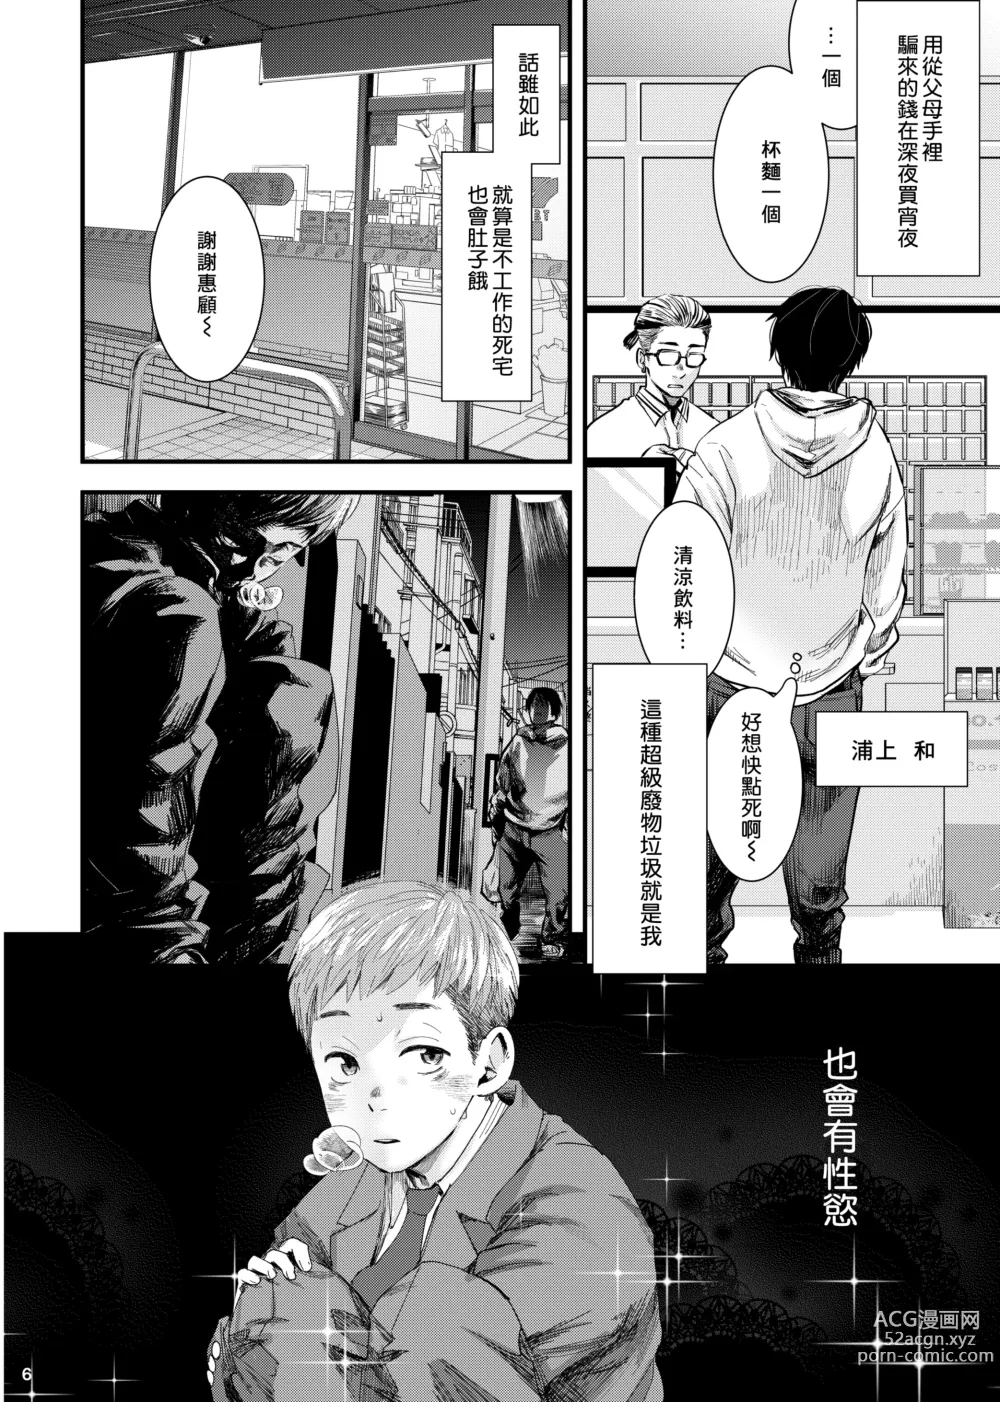 Page 5 of doujinshi SHOTA-CON syndrome